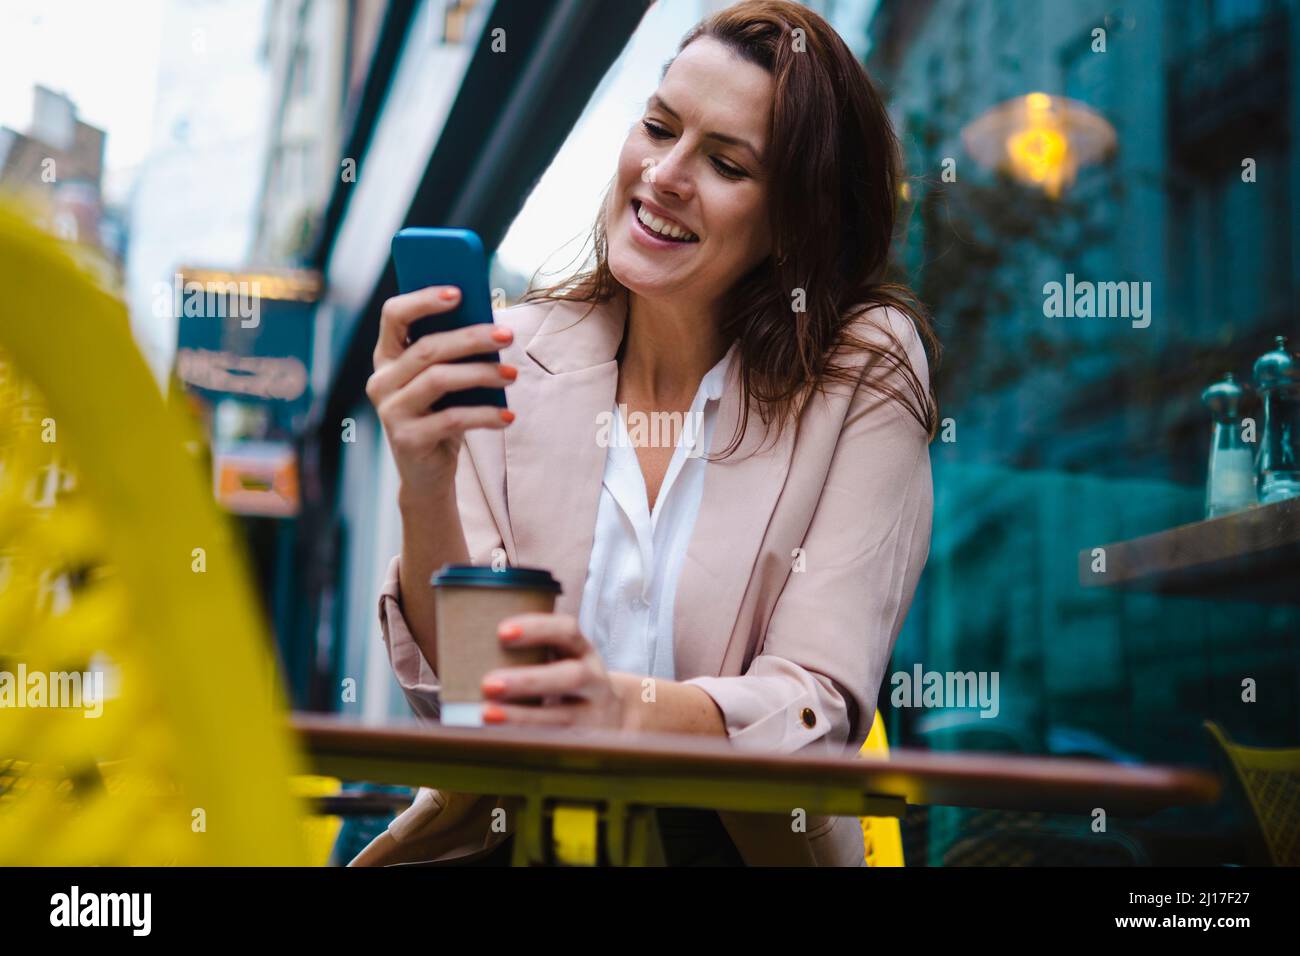 Happy woman using smart phone in sidewalk cafe Stock Photo